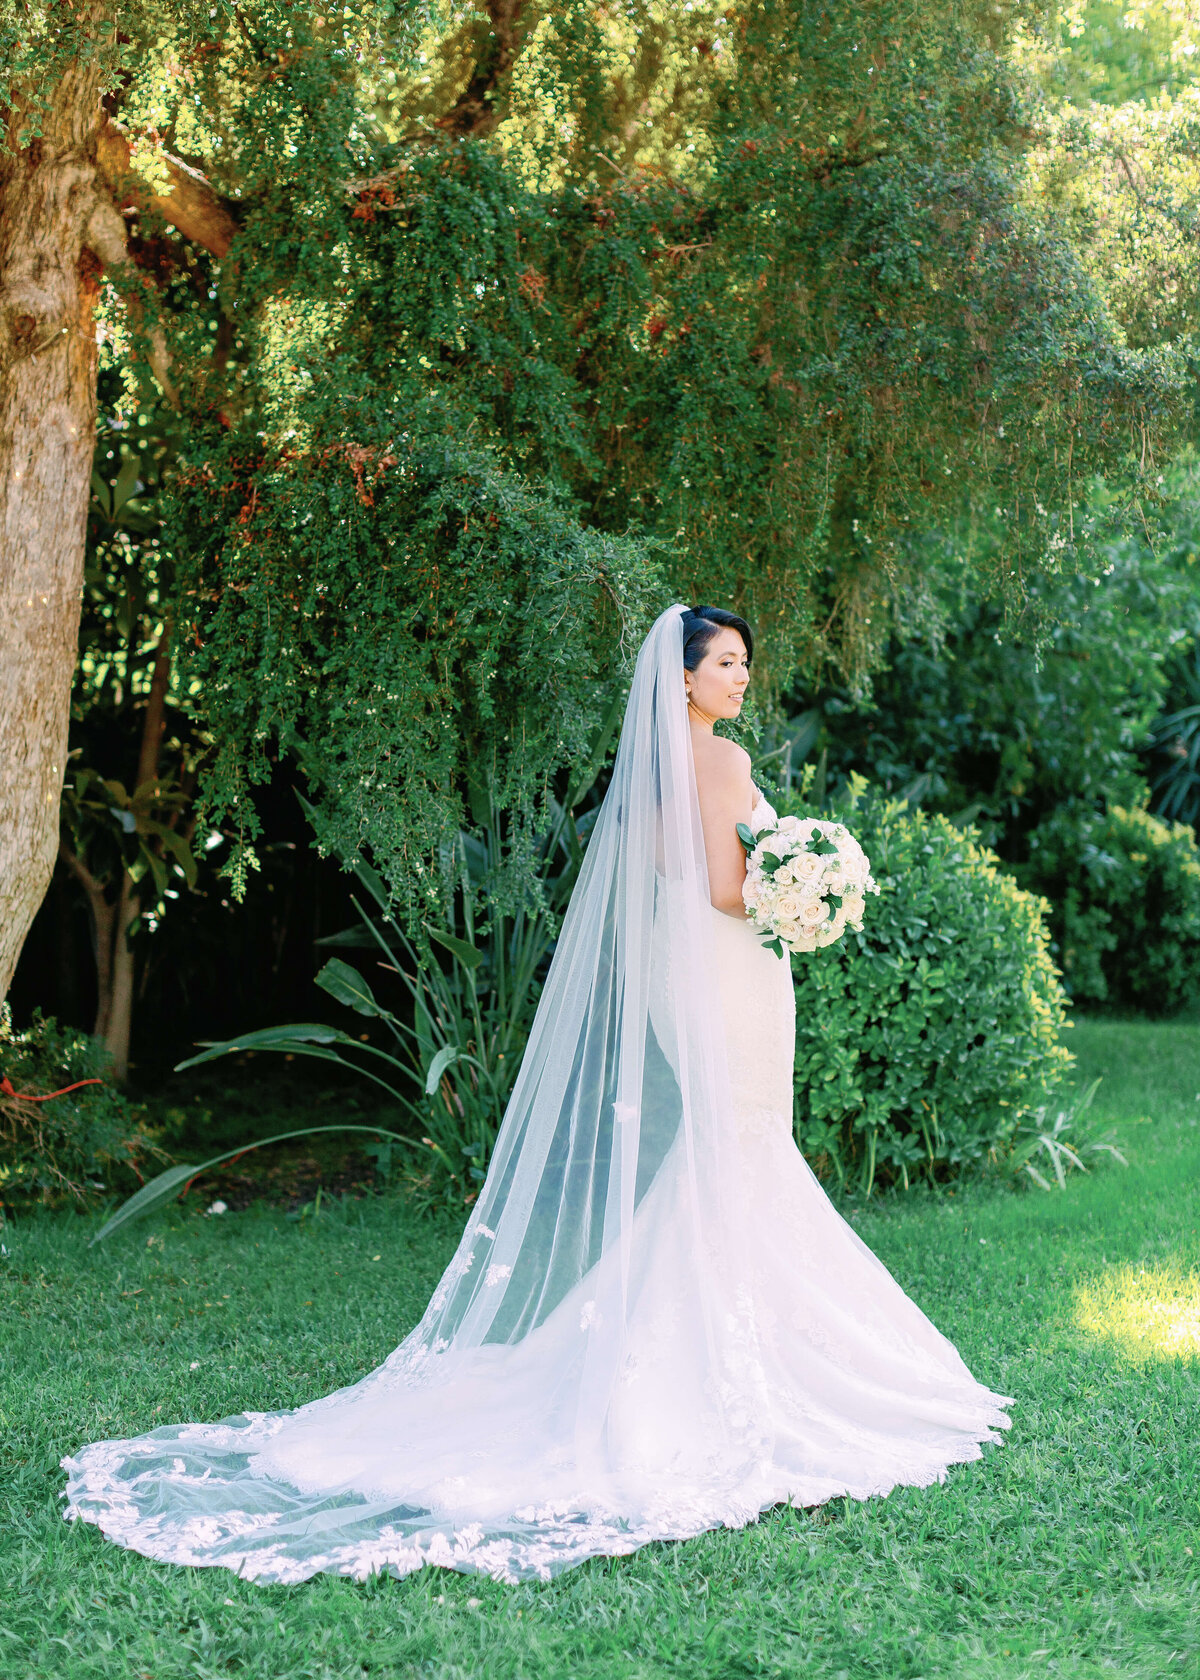 An Intimate and Timeless Backyard Wedding_Jennifer Trinidad Photography_224